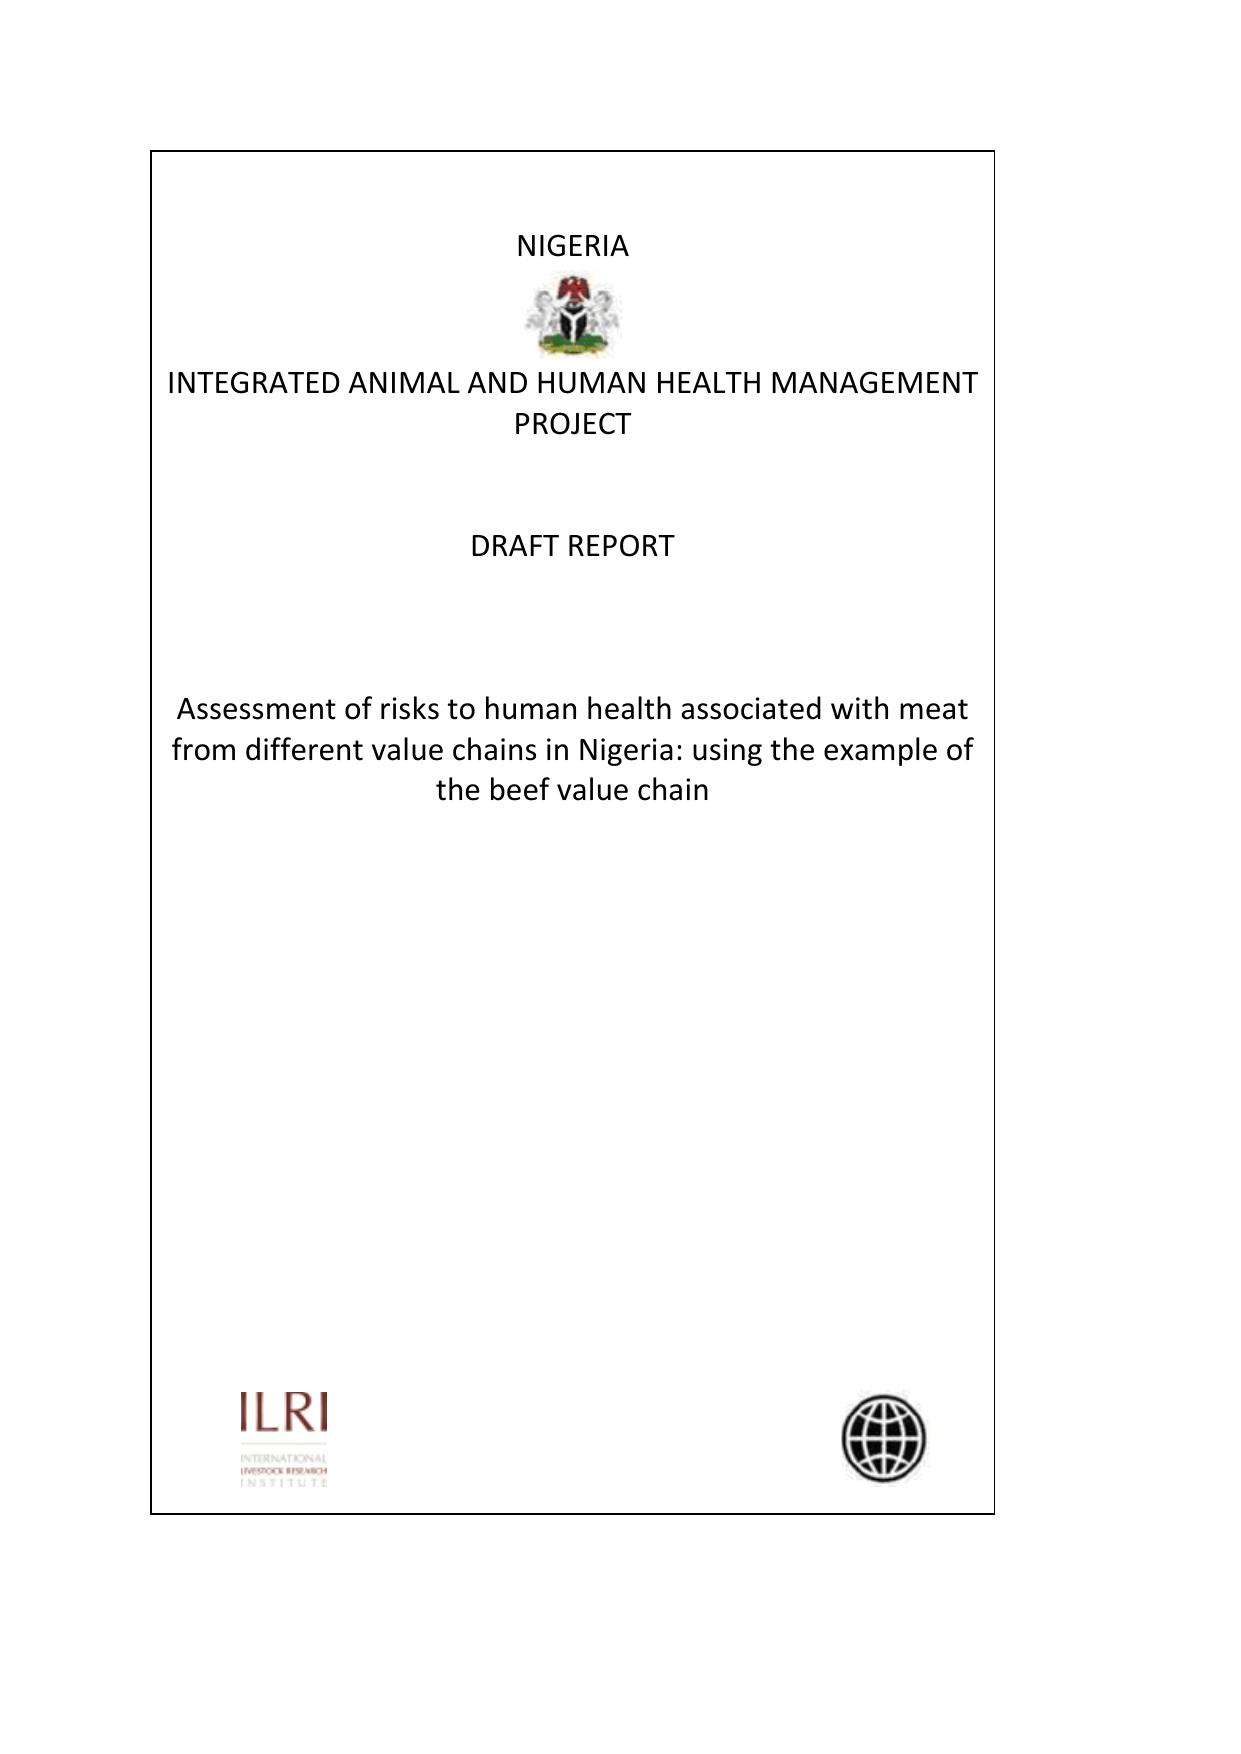 Microsoft Word - Final Report - Nigeria Meat Chain Study-ILRI